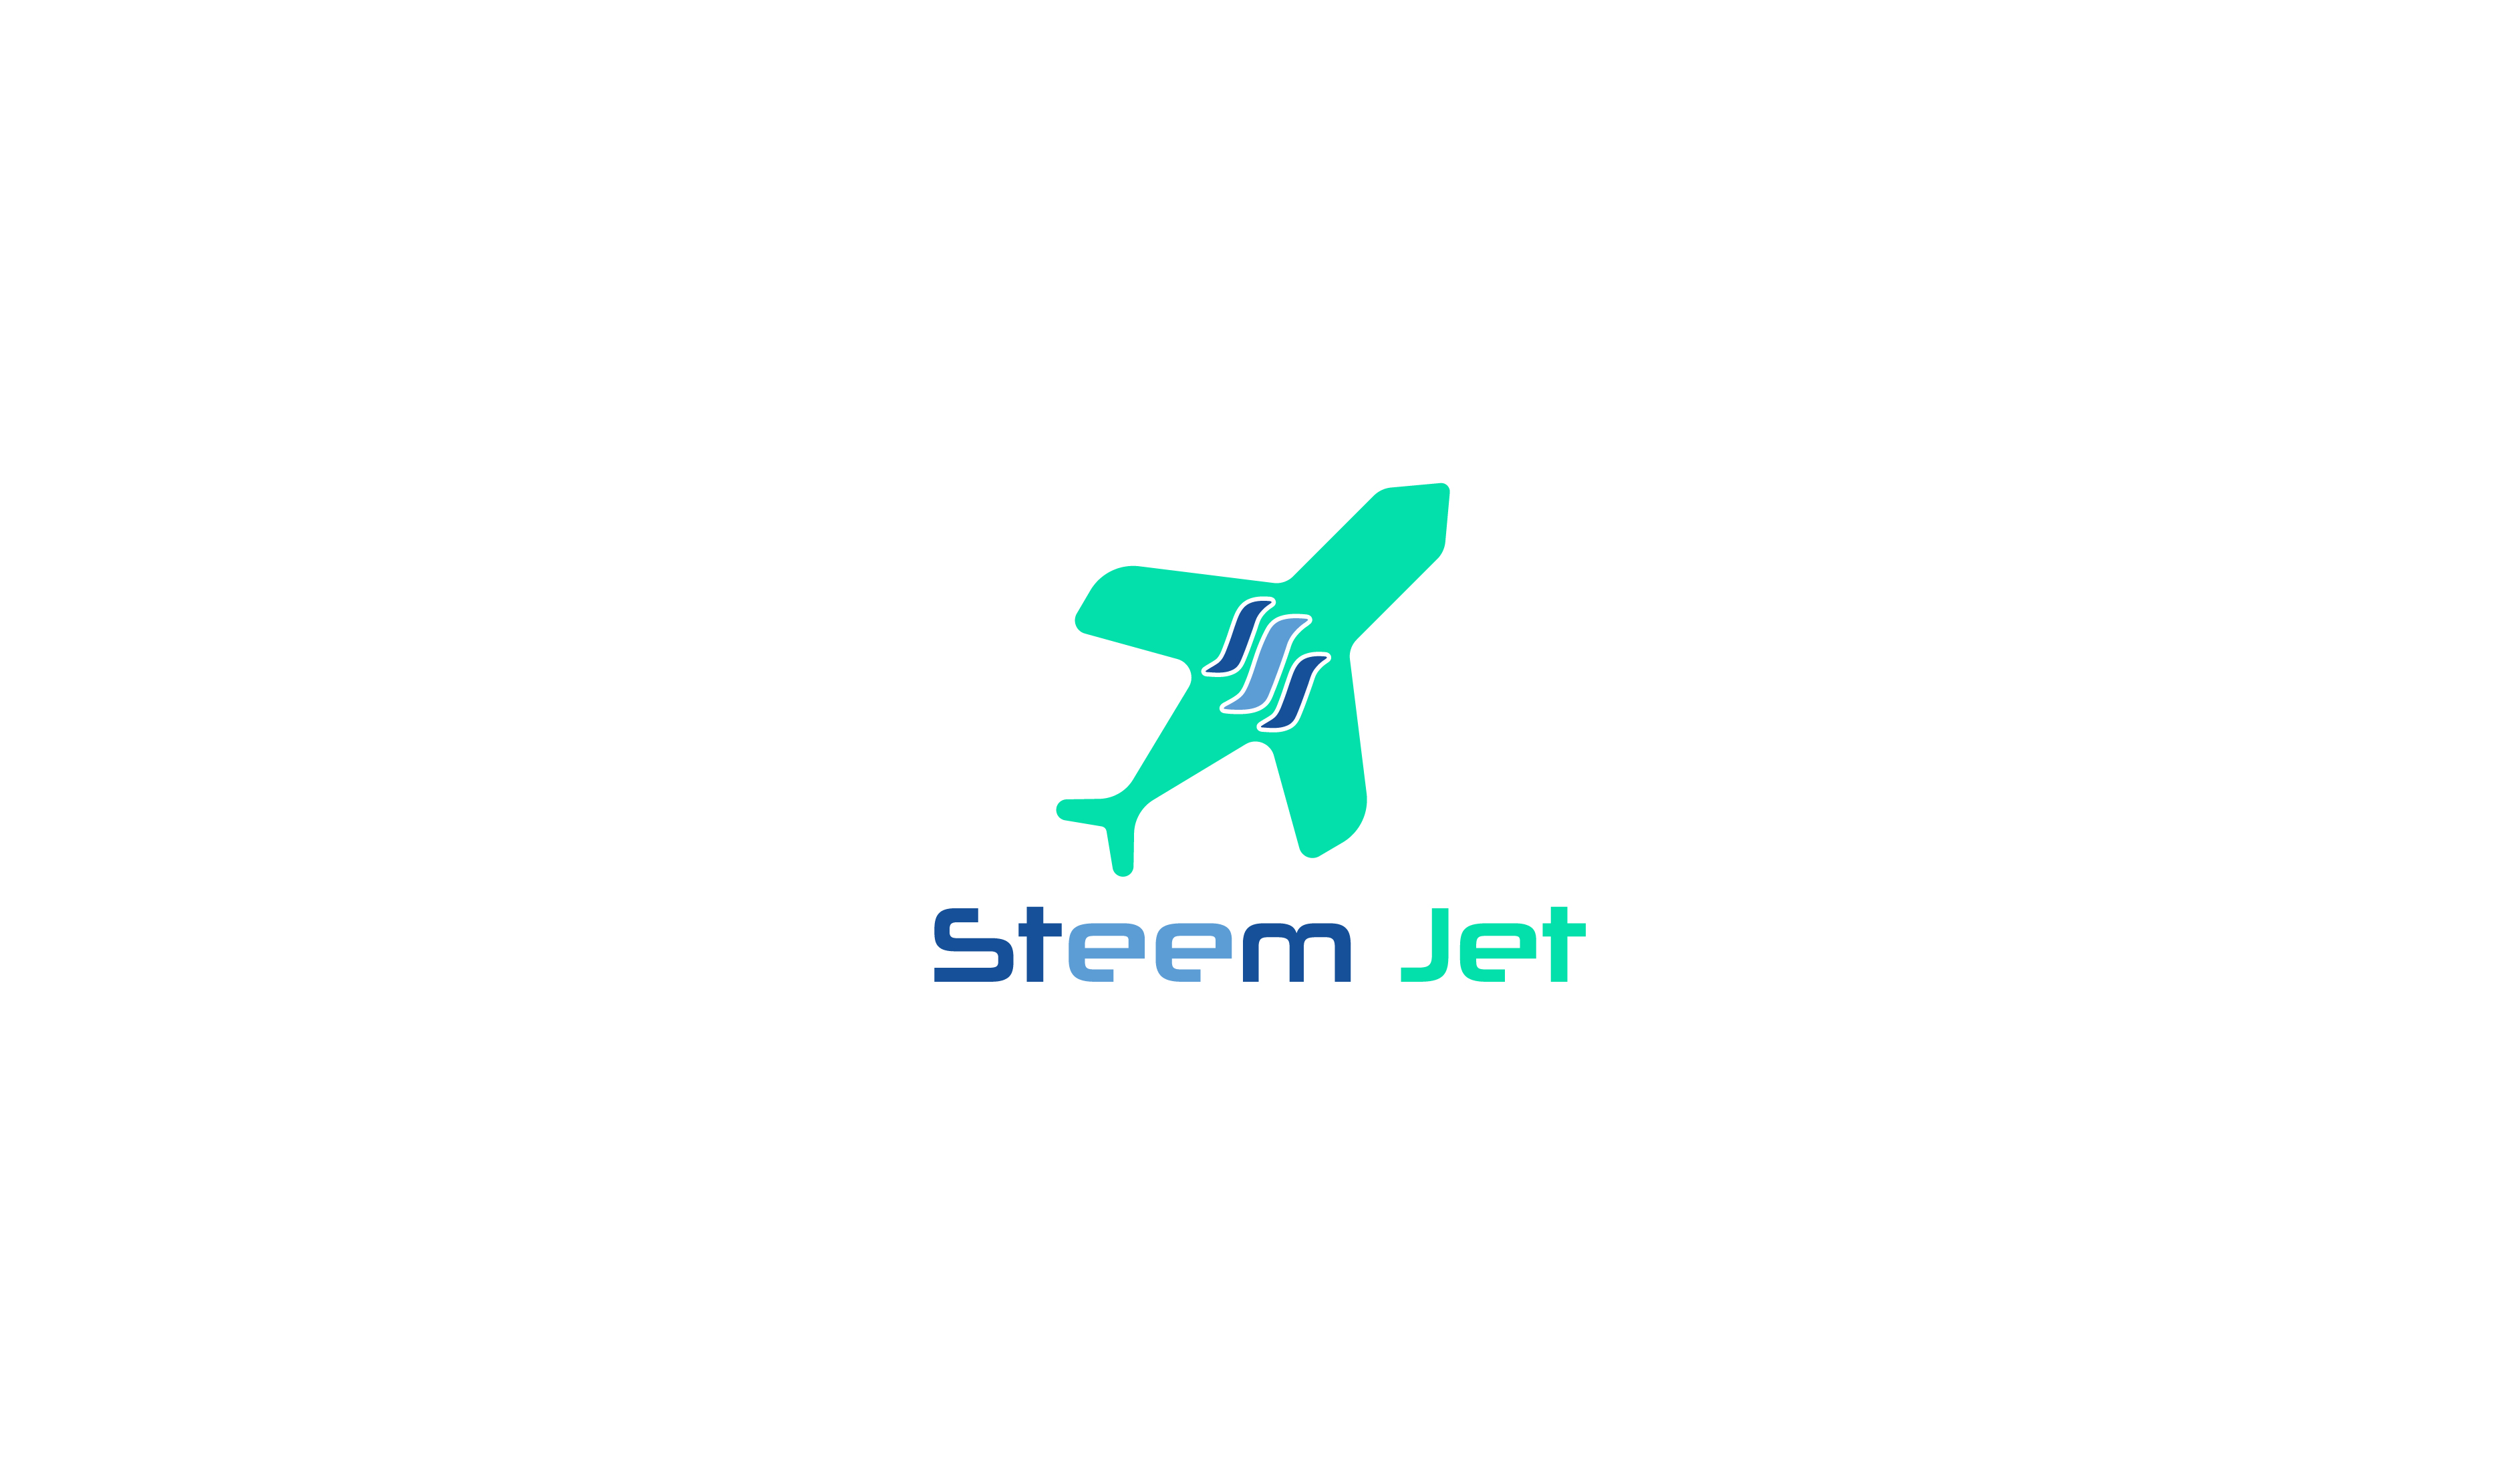 steem jet-01.jpg